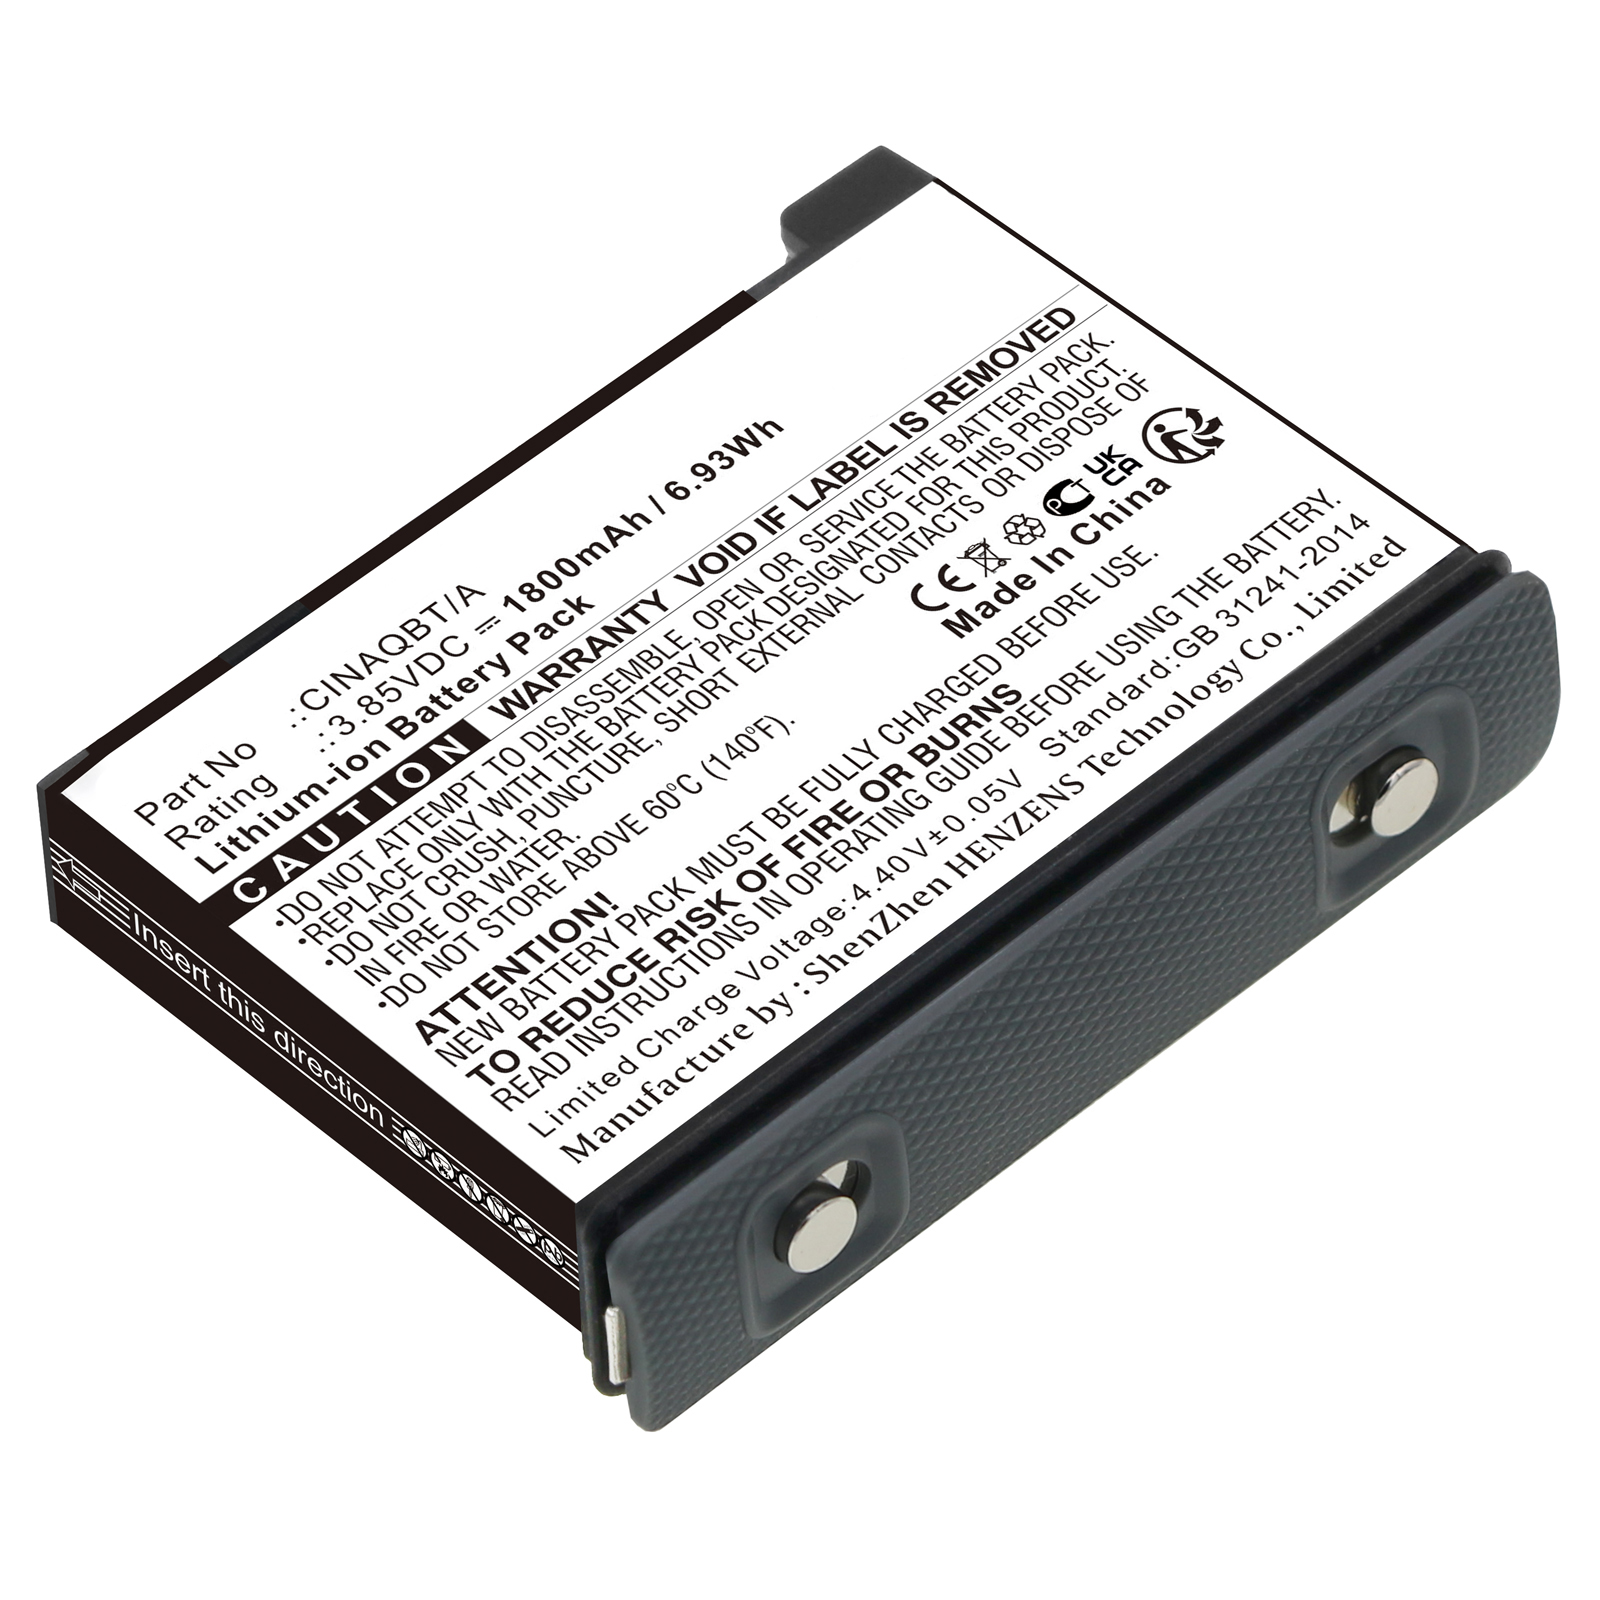 Synergy Digital Digital Camera Battery, Compatible with Insta360 CINAQBT/A Digital Camera Battery (Li-ion, 3.85V, 1800mAh)